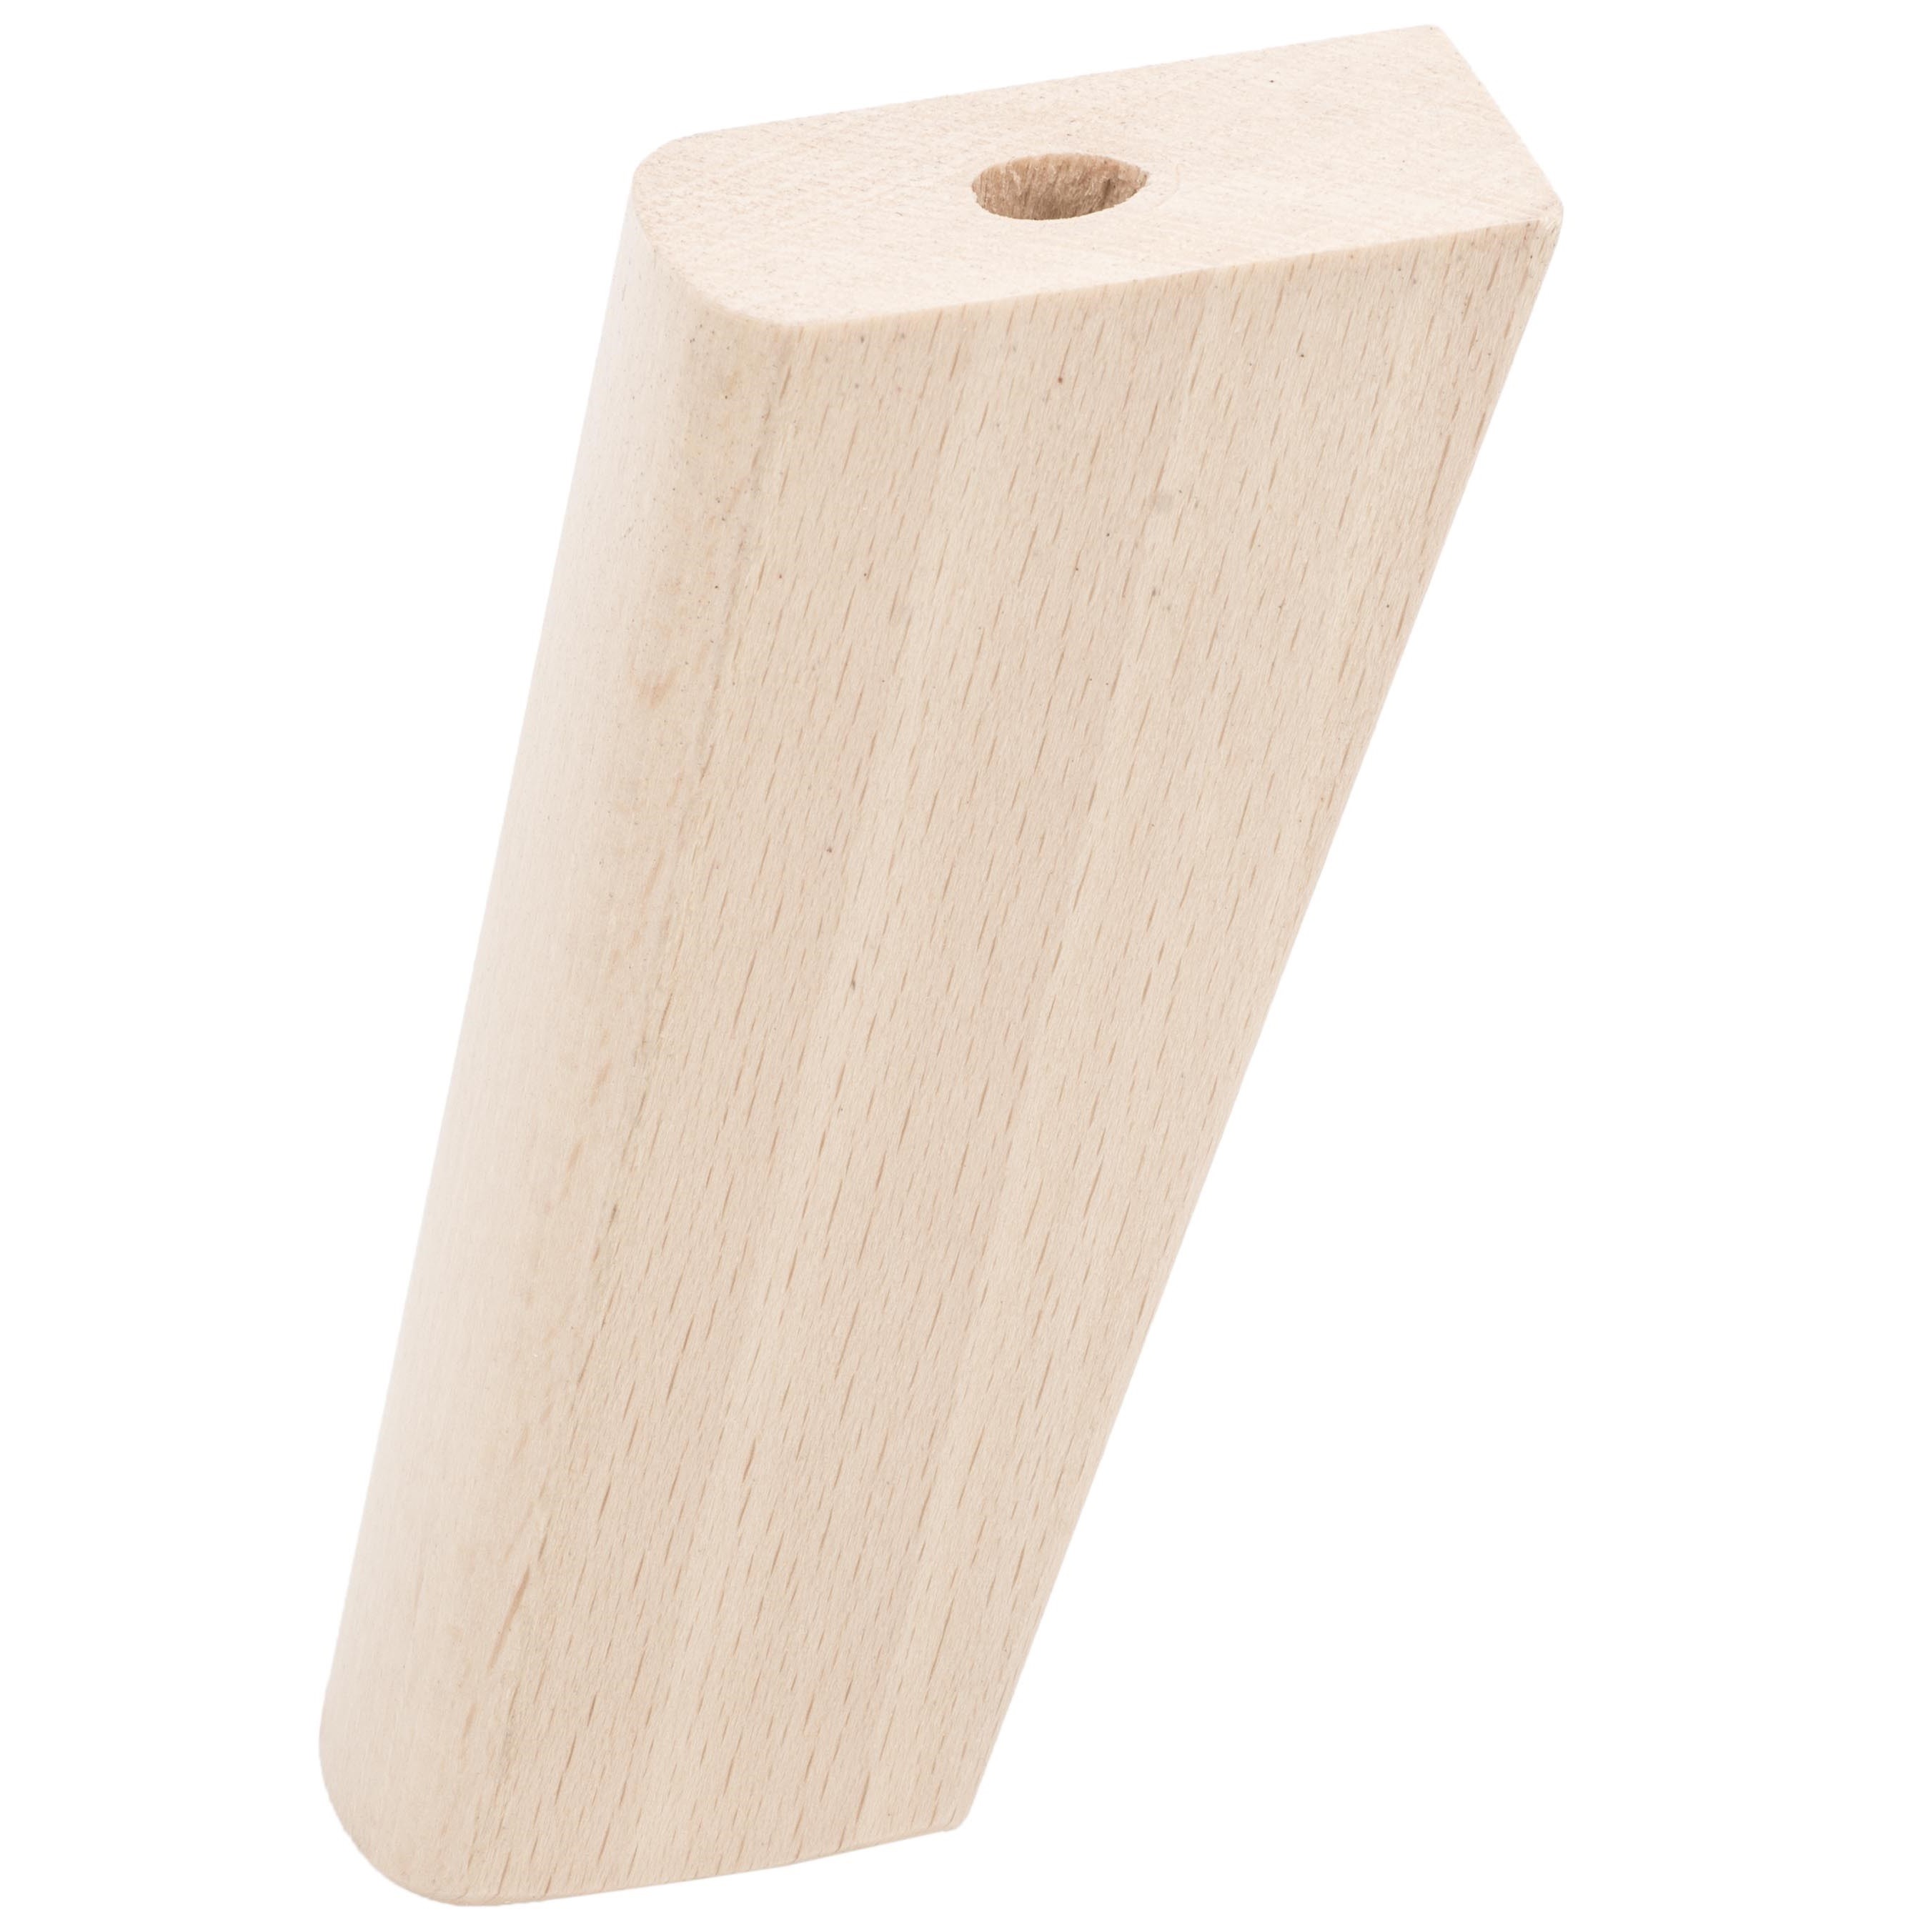 Type 2H6 wood. - 10,50 cm